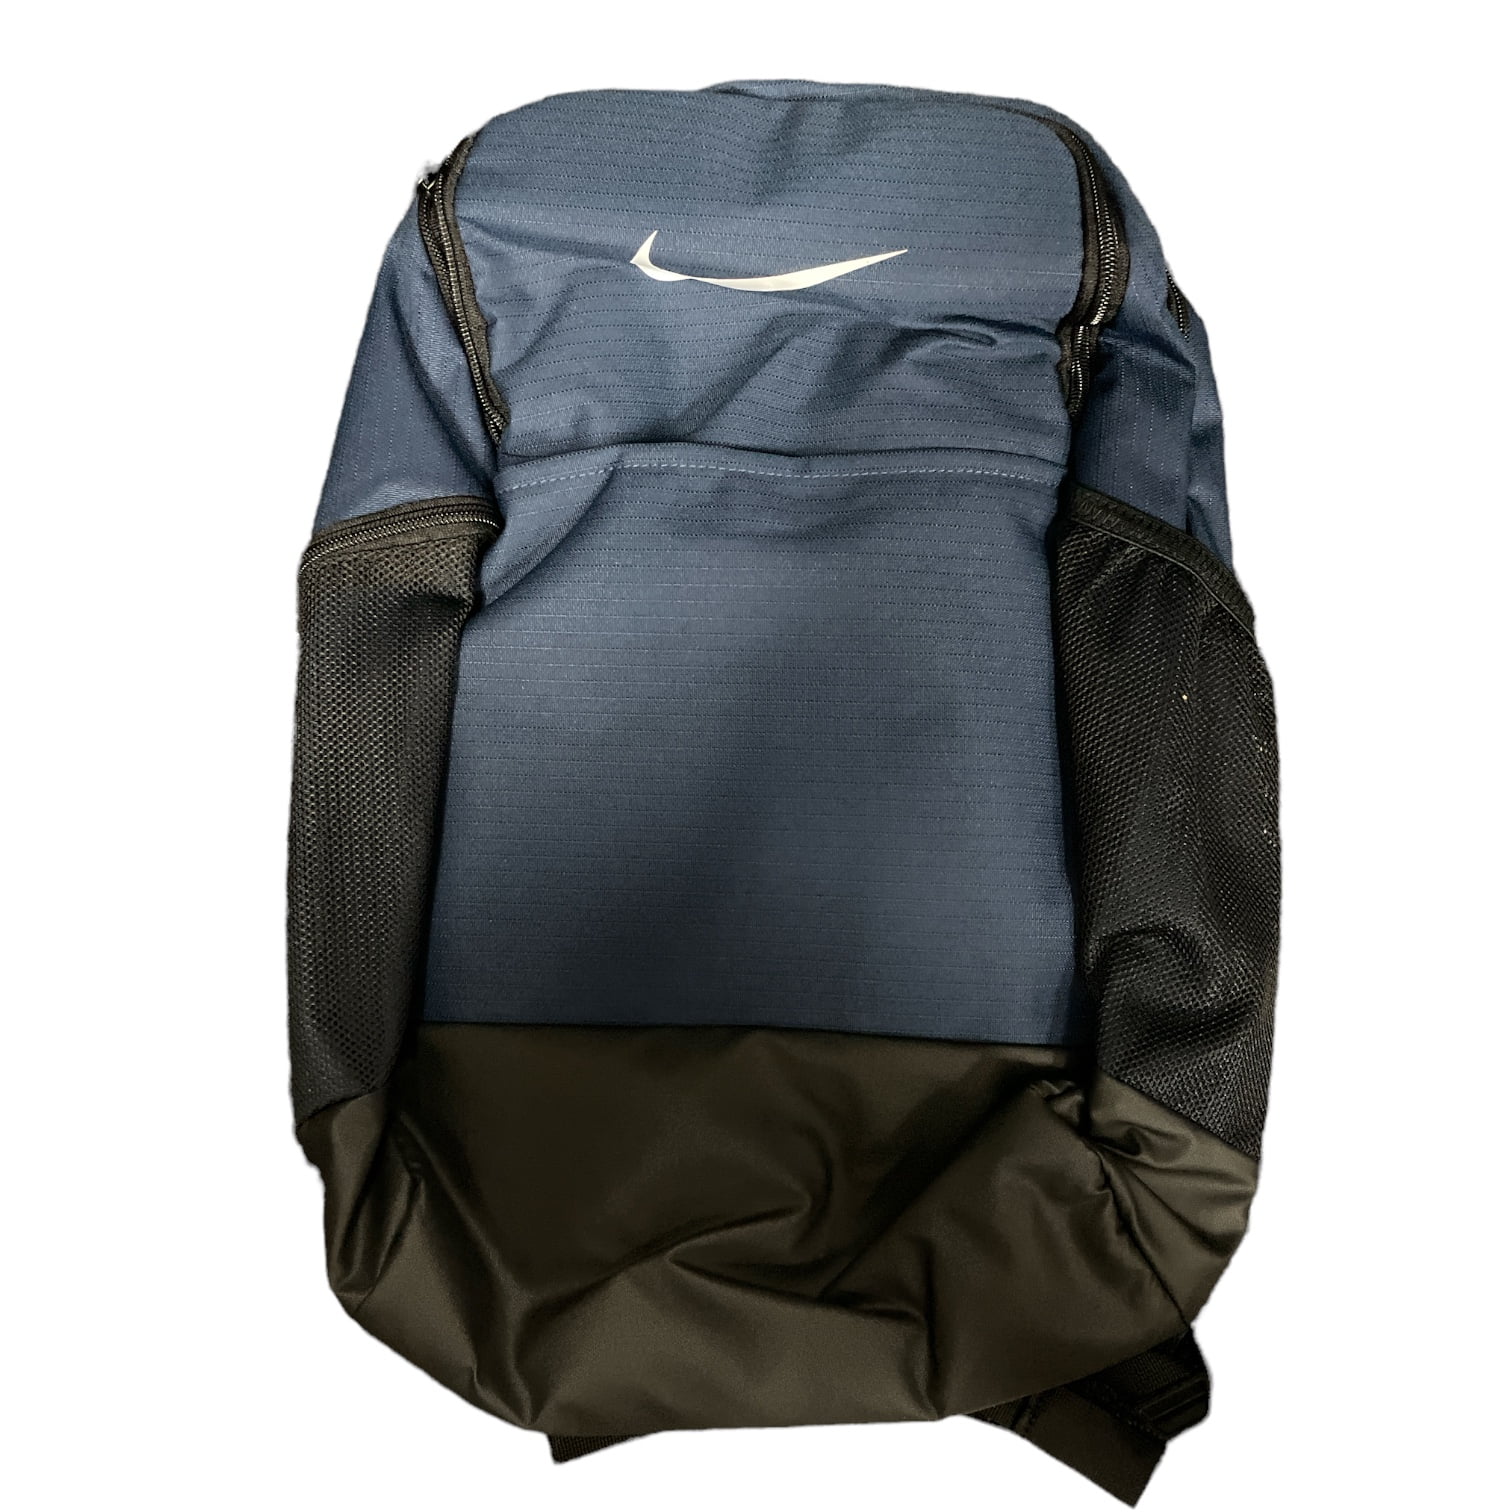 Nike Brasilia Medium Training Backpack, Water Resistant, Midnight